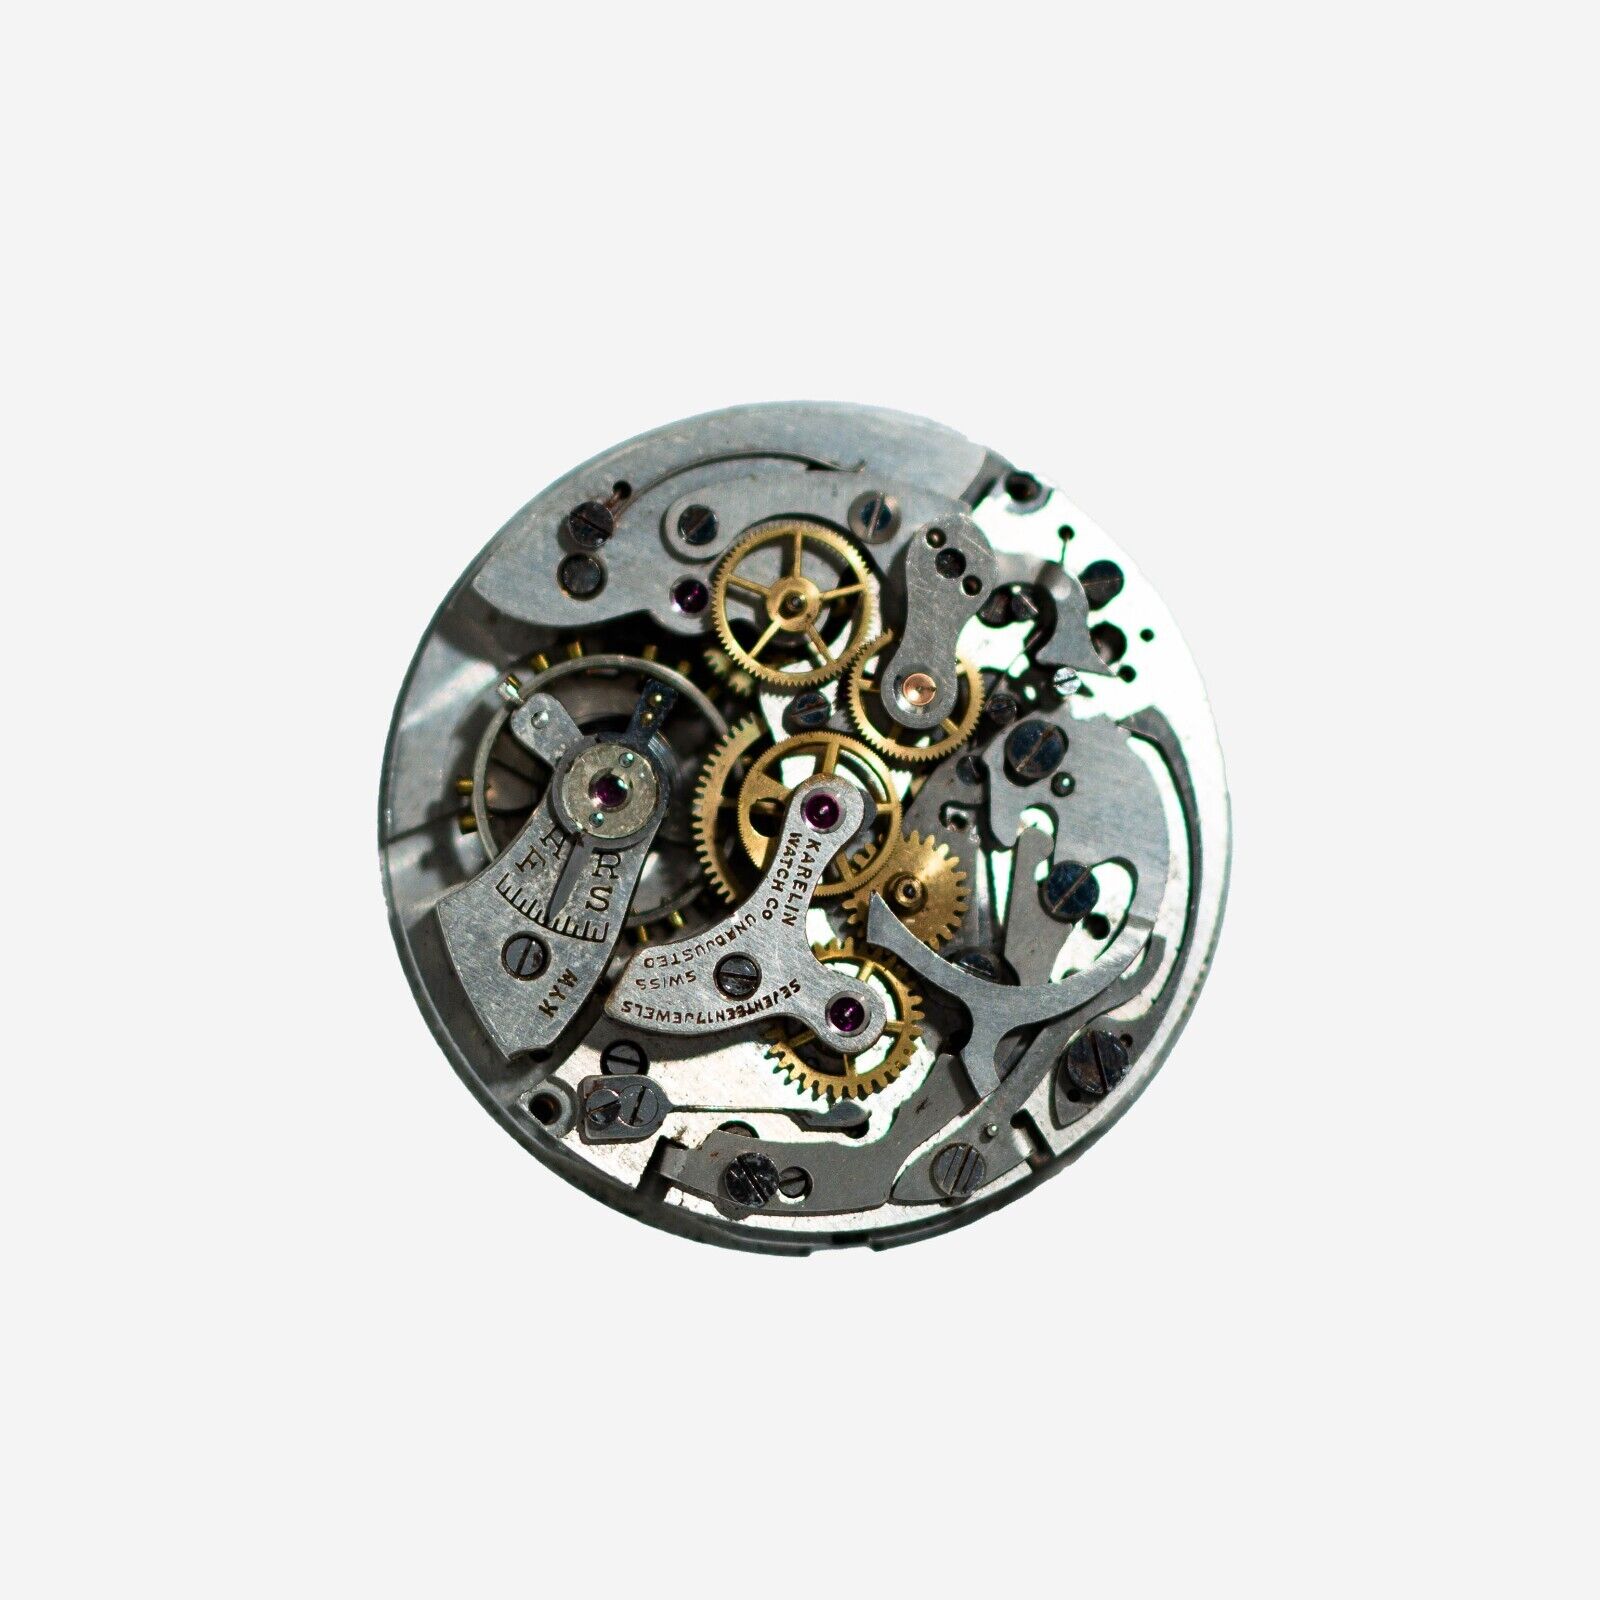 Karelin Landeron Cal. 54 Swiss 17 Jewels Chronograph Manual Wind Watch Movement Gallery Image 0